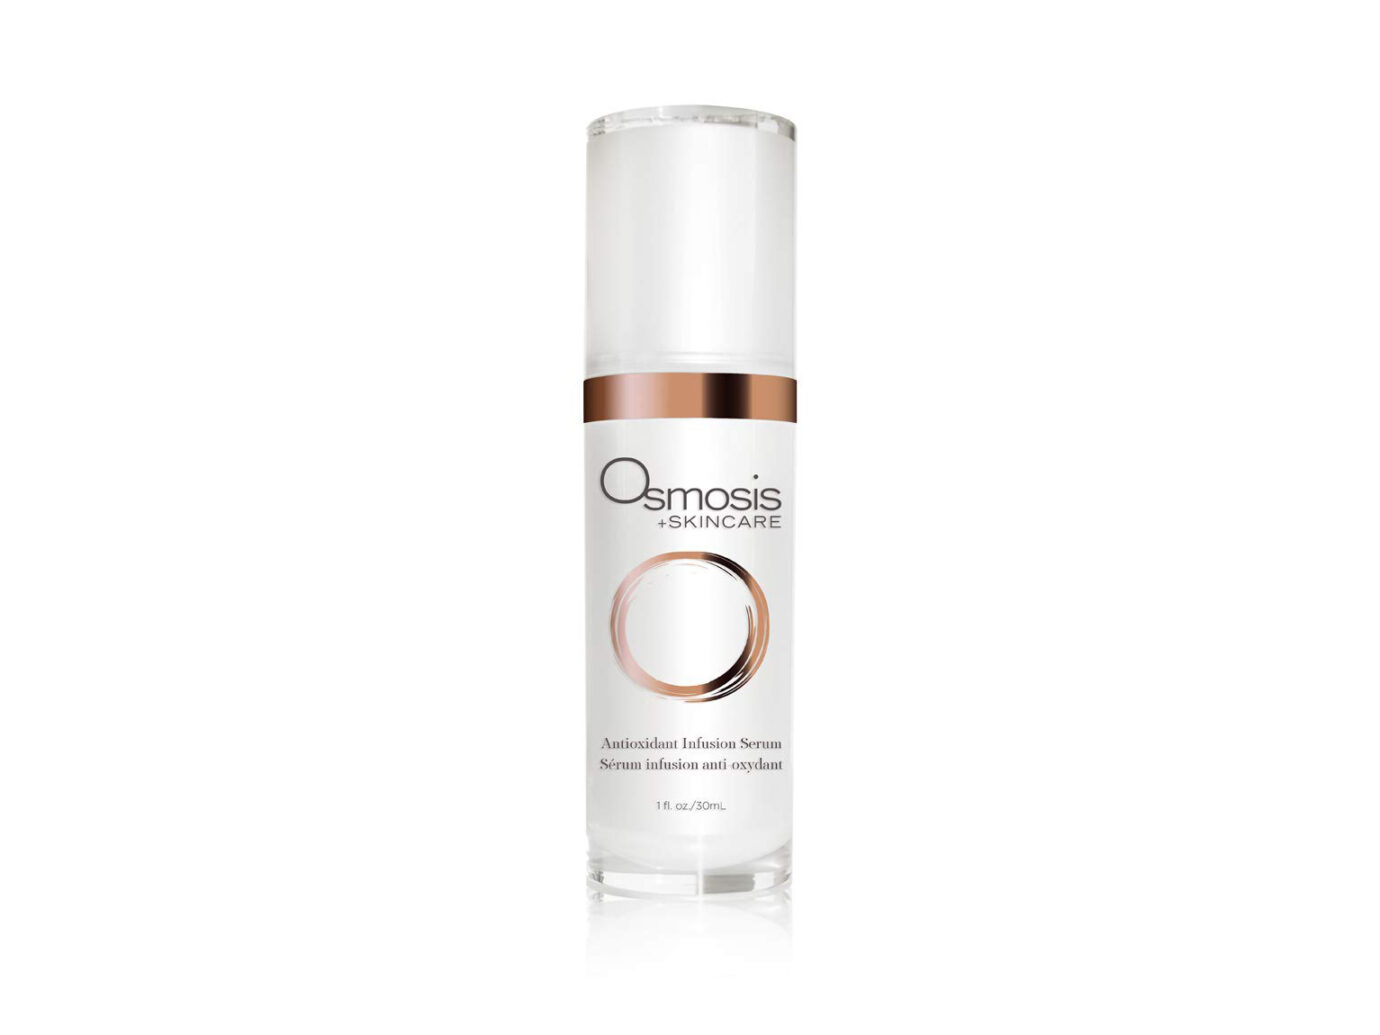 Osmosis +Skincare Antioxidant Infusion Serum